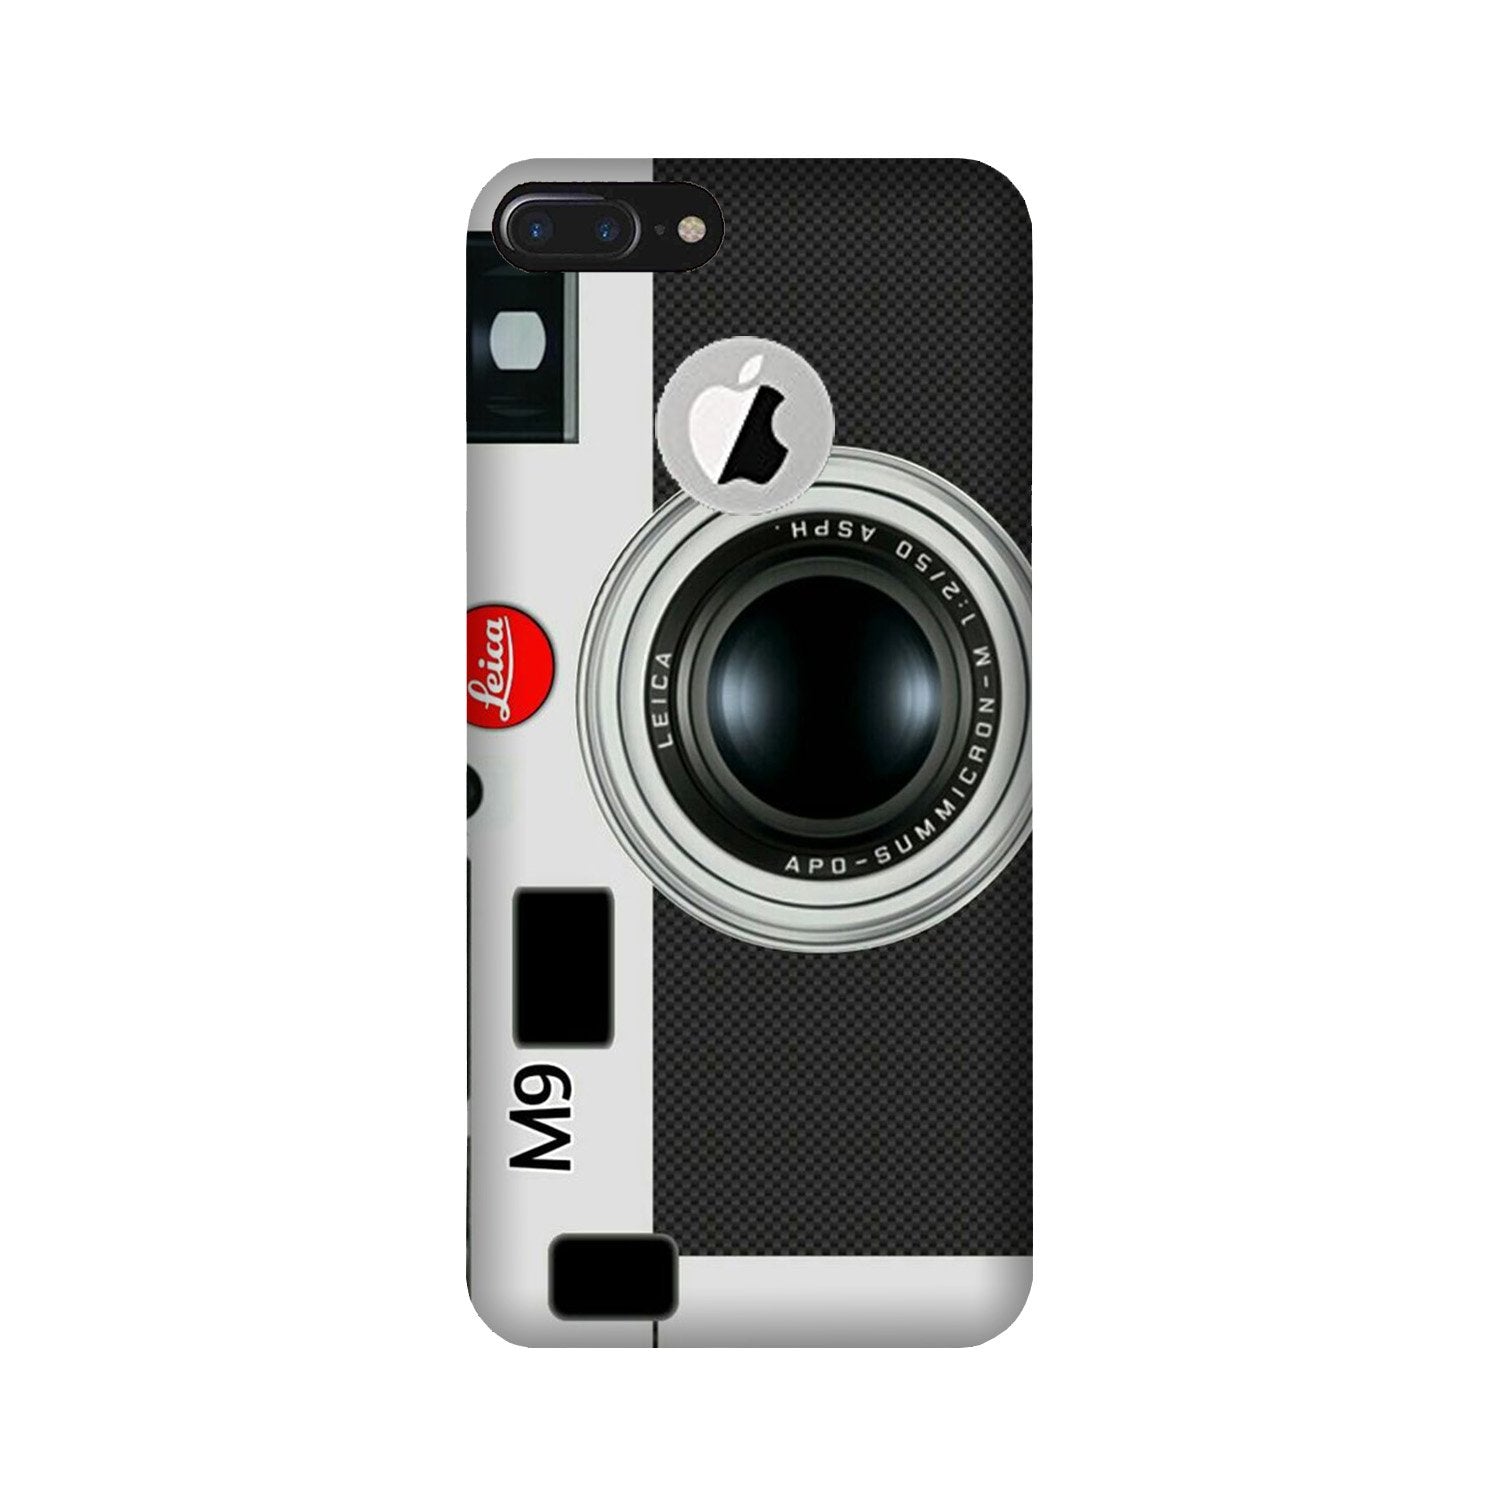 Camera Case for iPhone 7 Plus logo cut (Design No. 257)